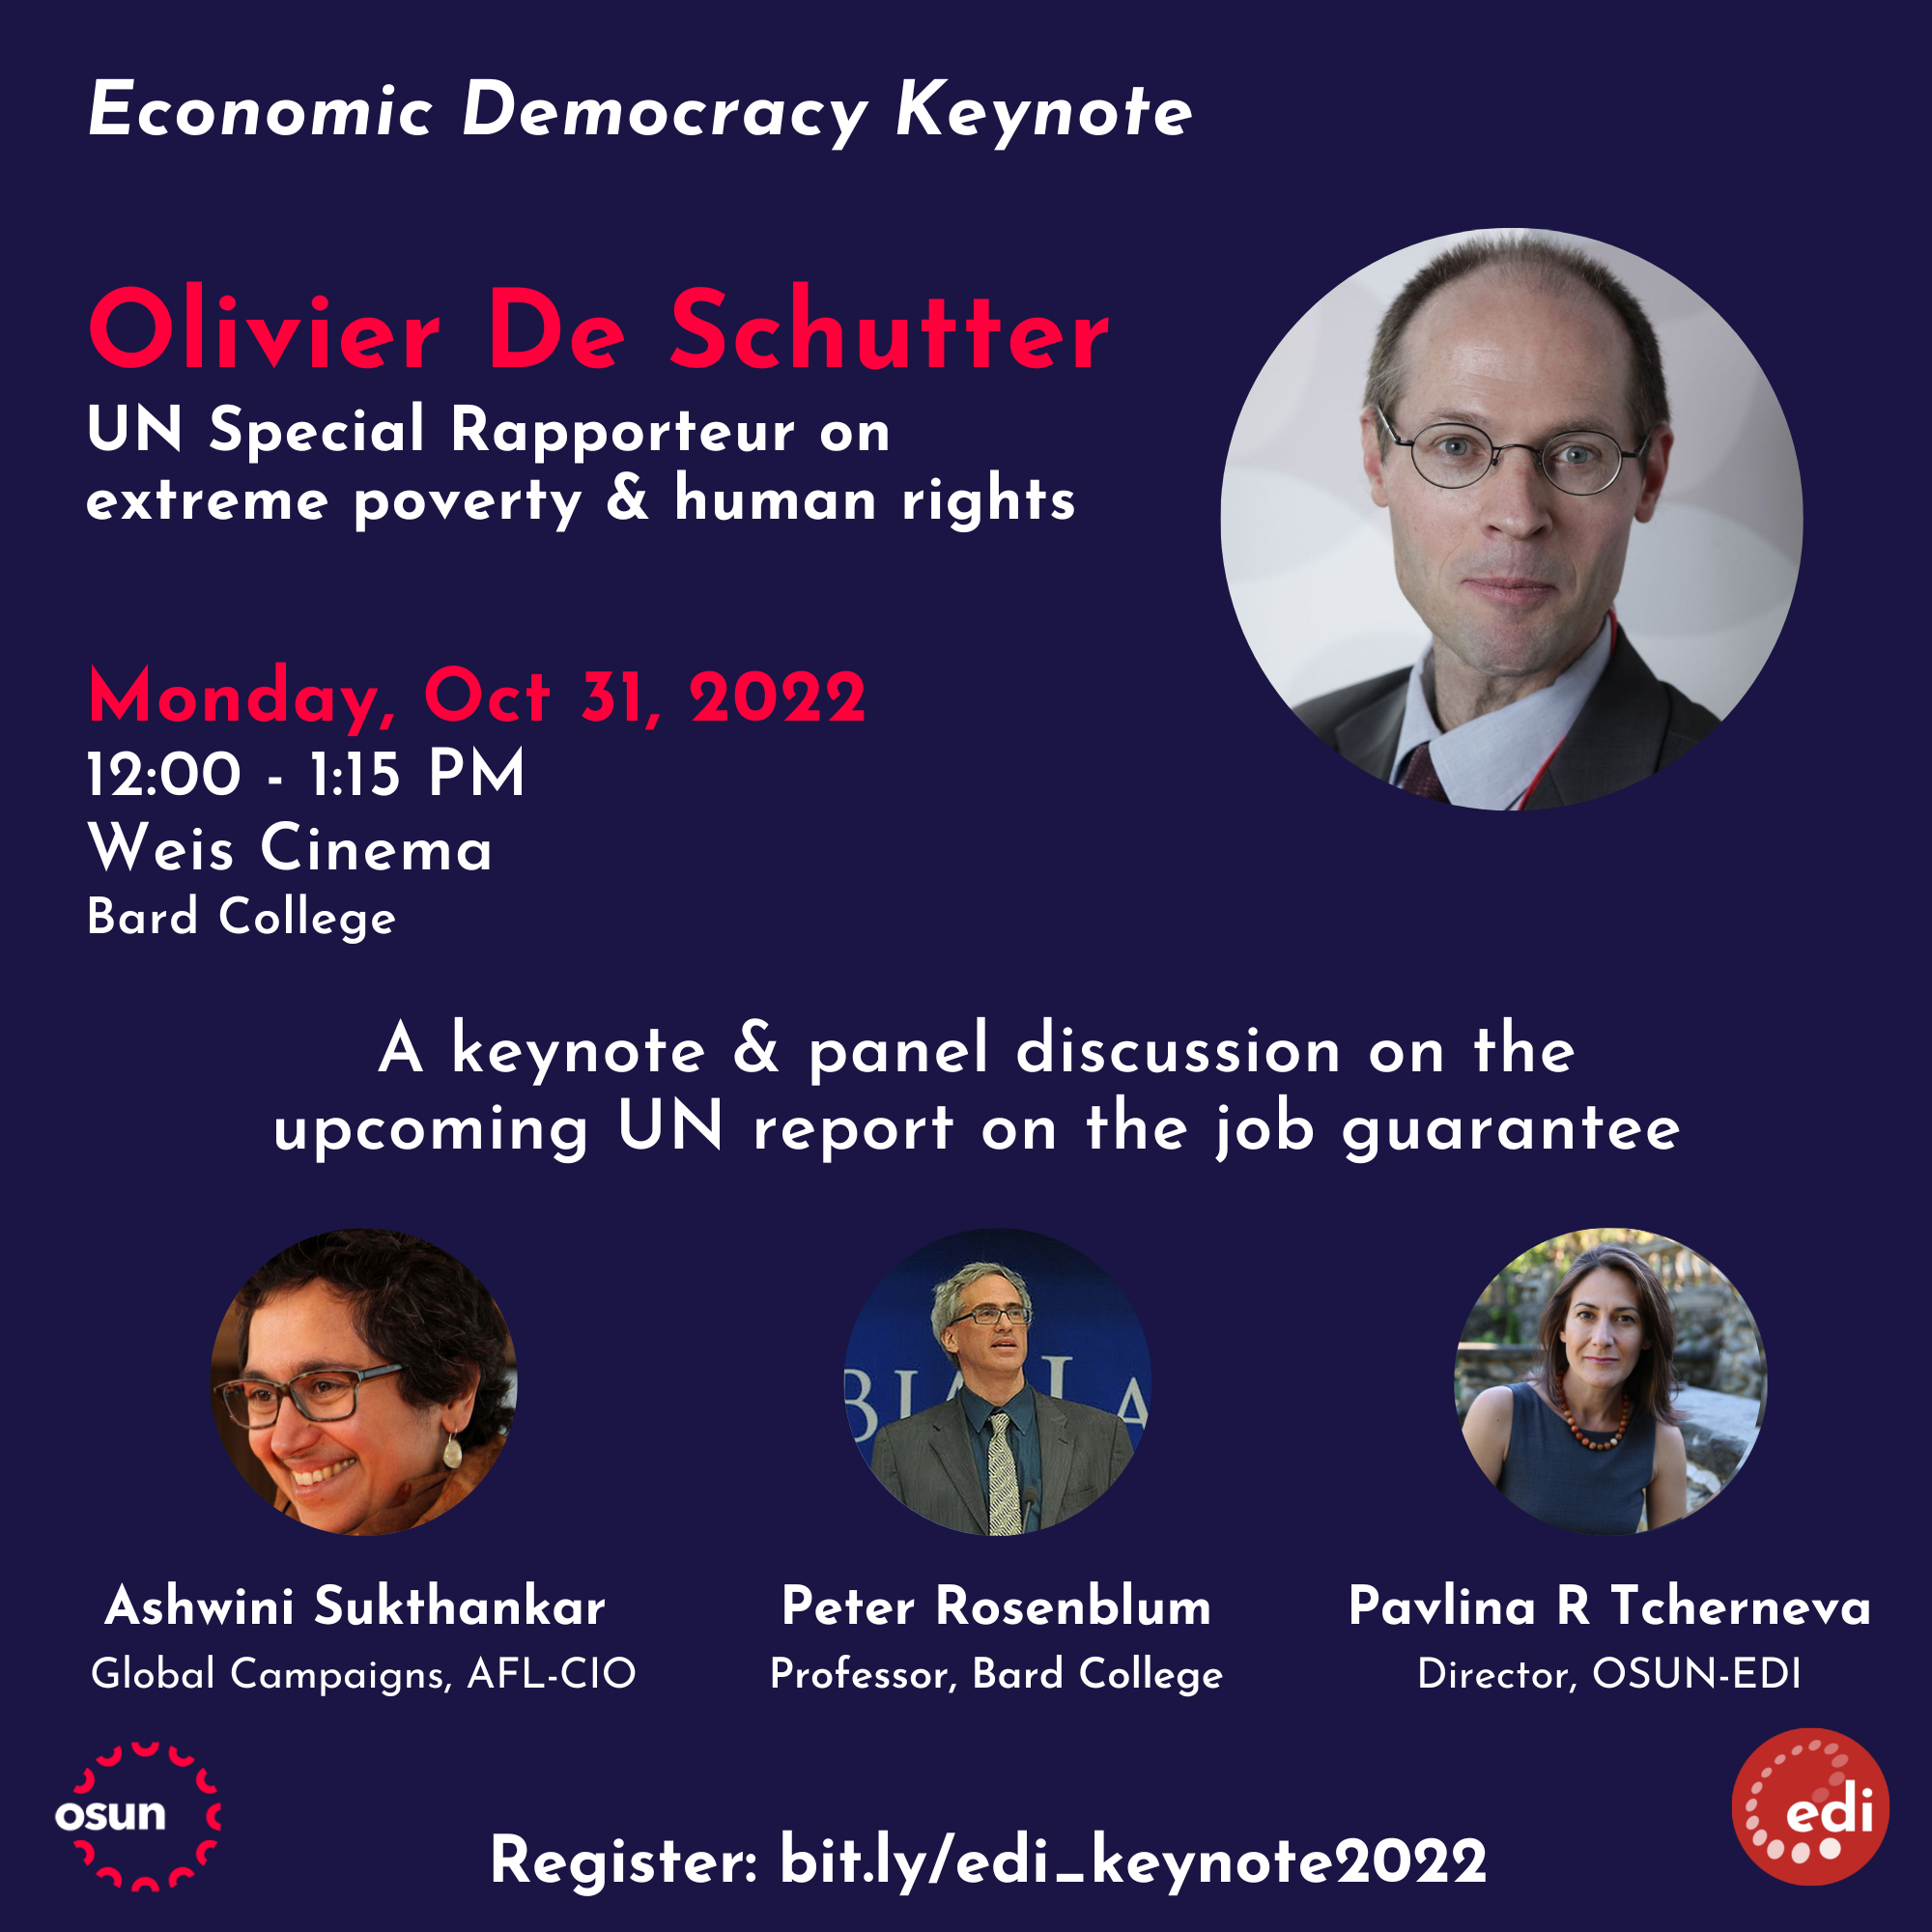 2022 Economic Democracy Keynote with UN Special Rapporteur De Schutter